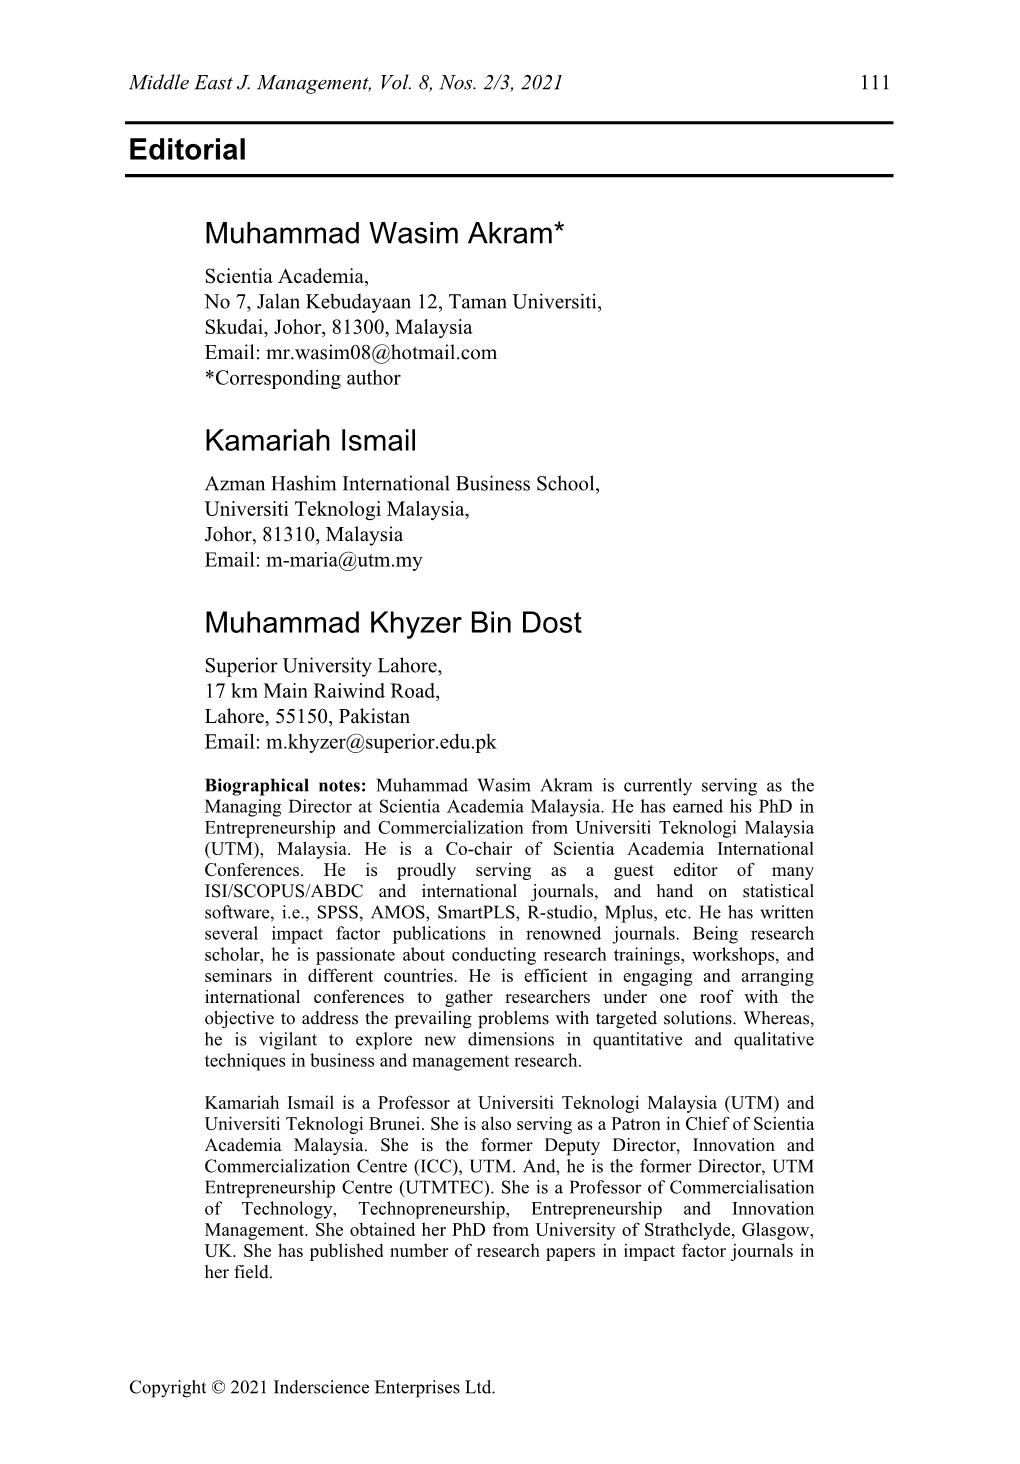 Editorial Muhammad Wasim Akram* Kamariah Ismail Muhammad